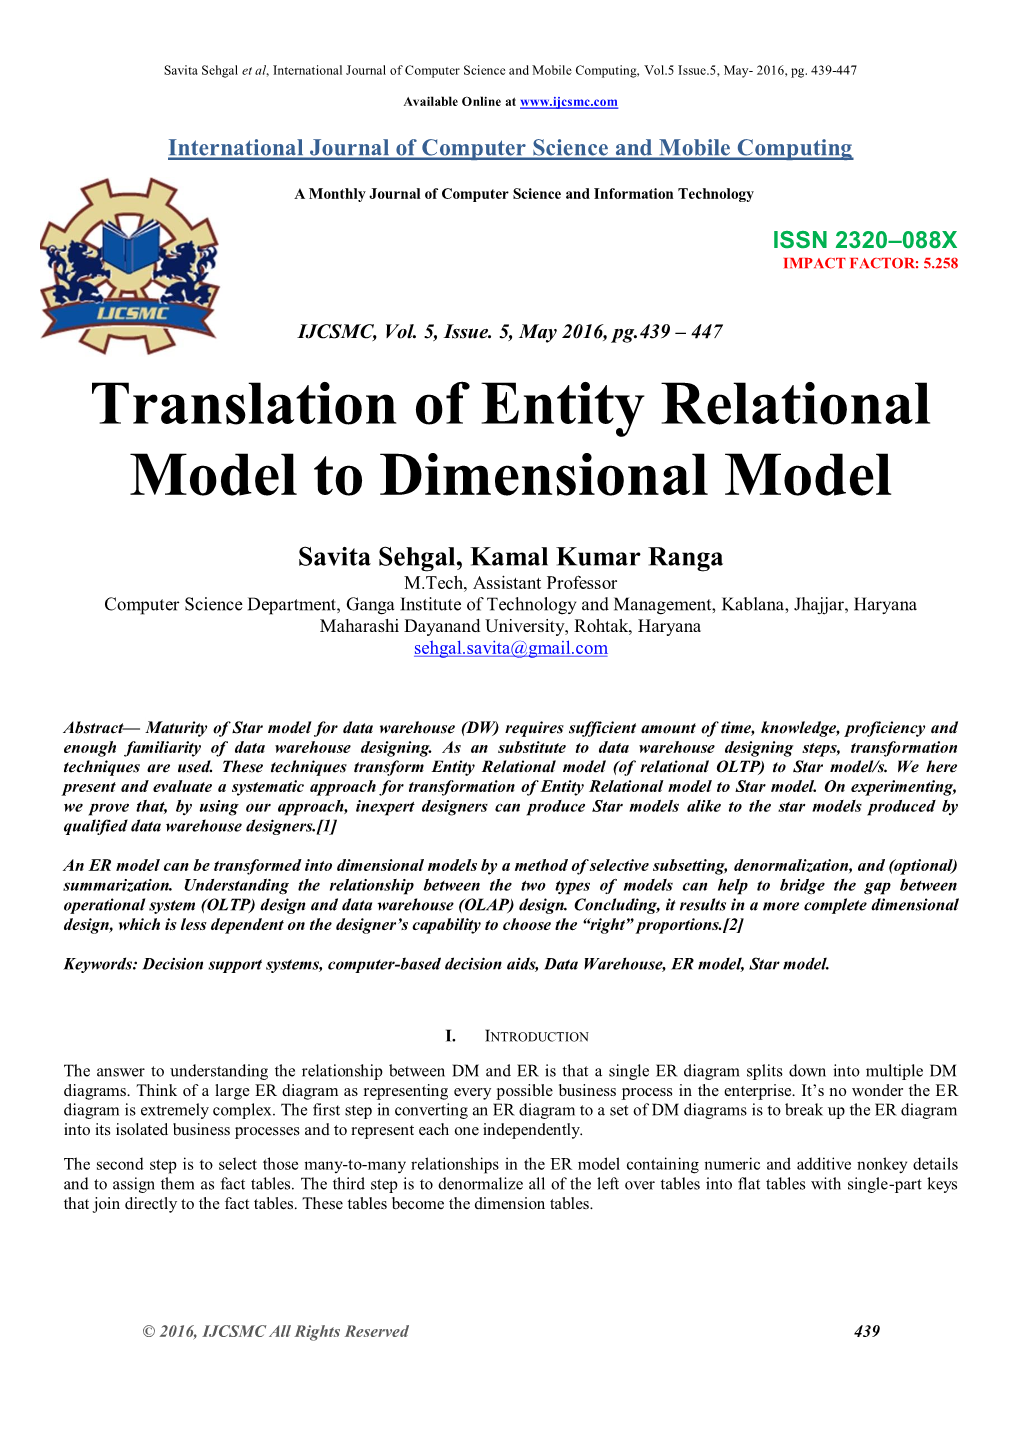 Translation of Entity Relational Model to Dimensional Model